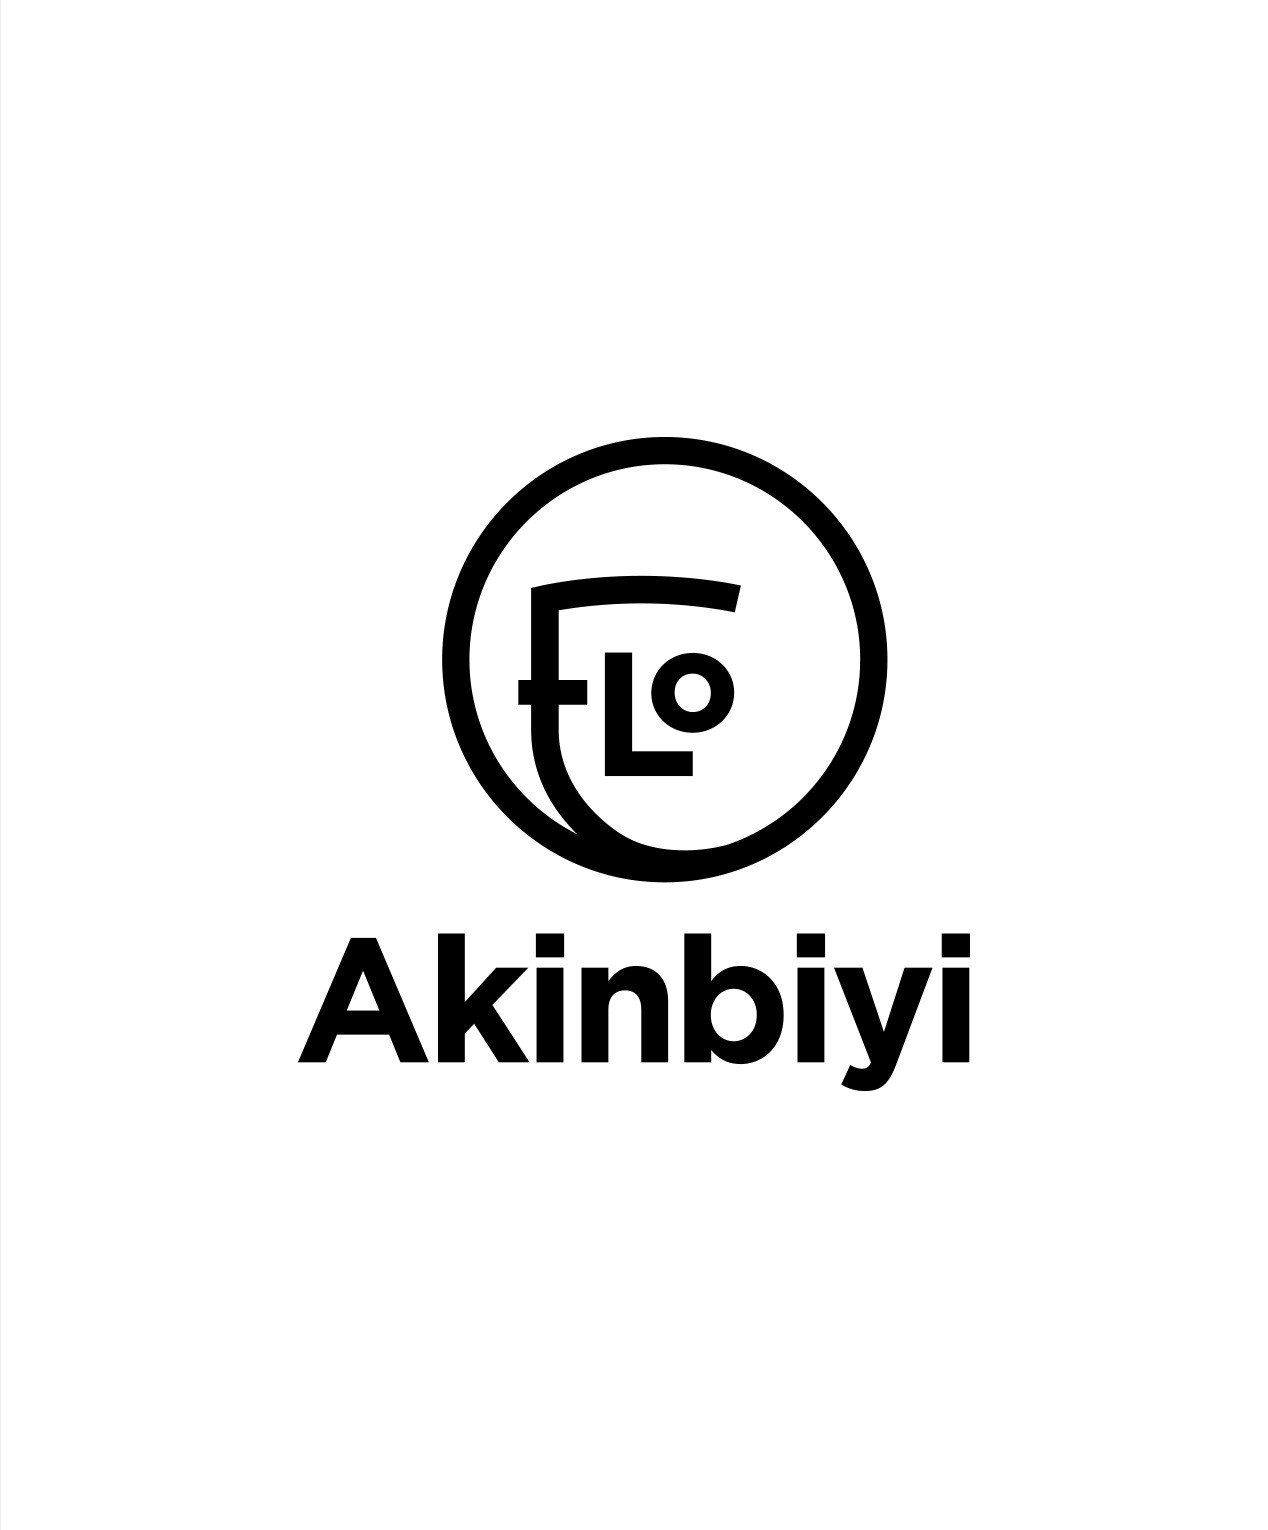 Flo Akinbiyi Rebrand by Main Division